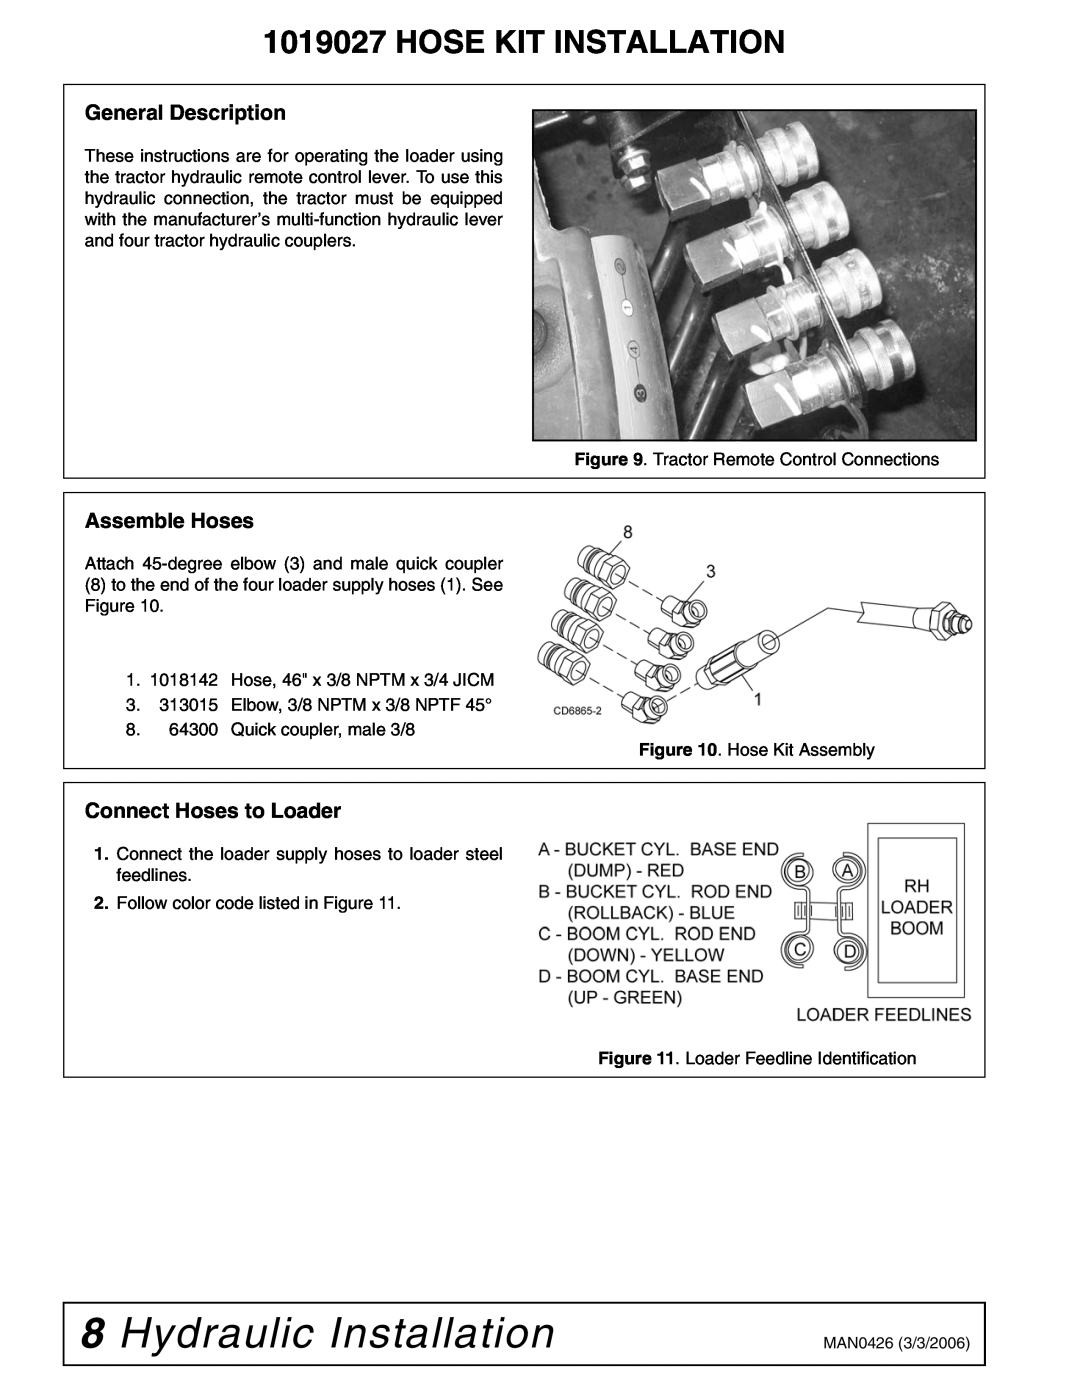 Woods Equipment 211716 Hydraulic Installation, Hose Kit Installation, General Description, Assemble Hoses 